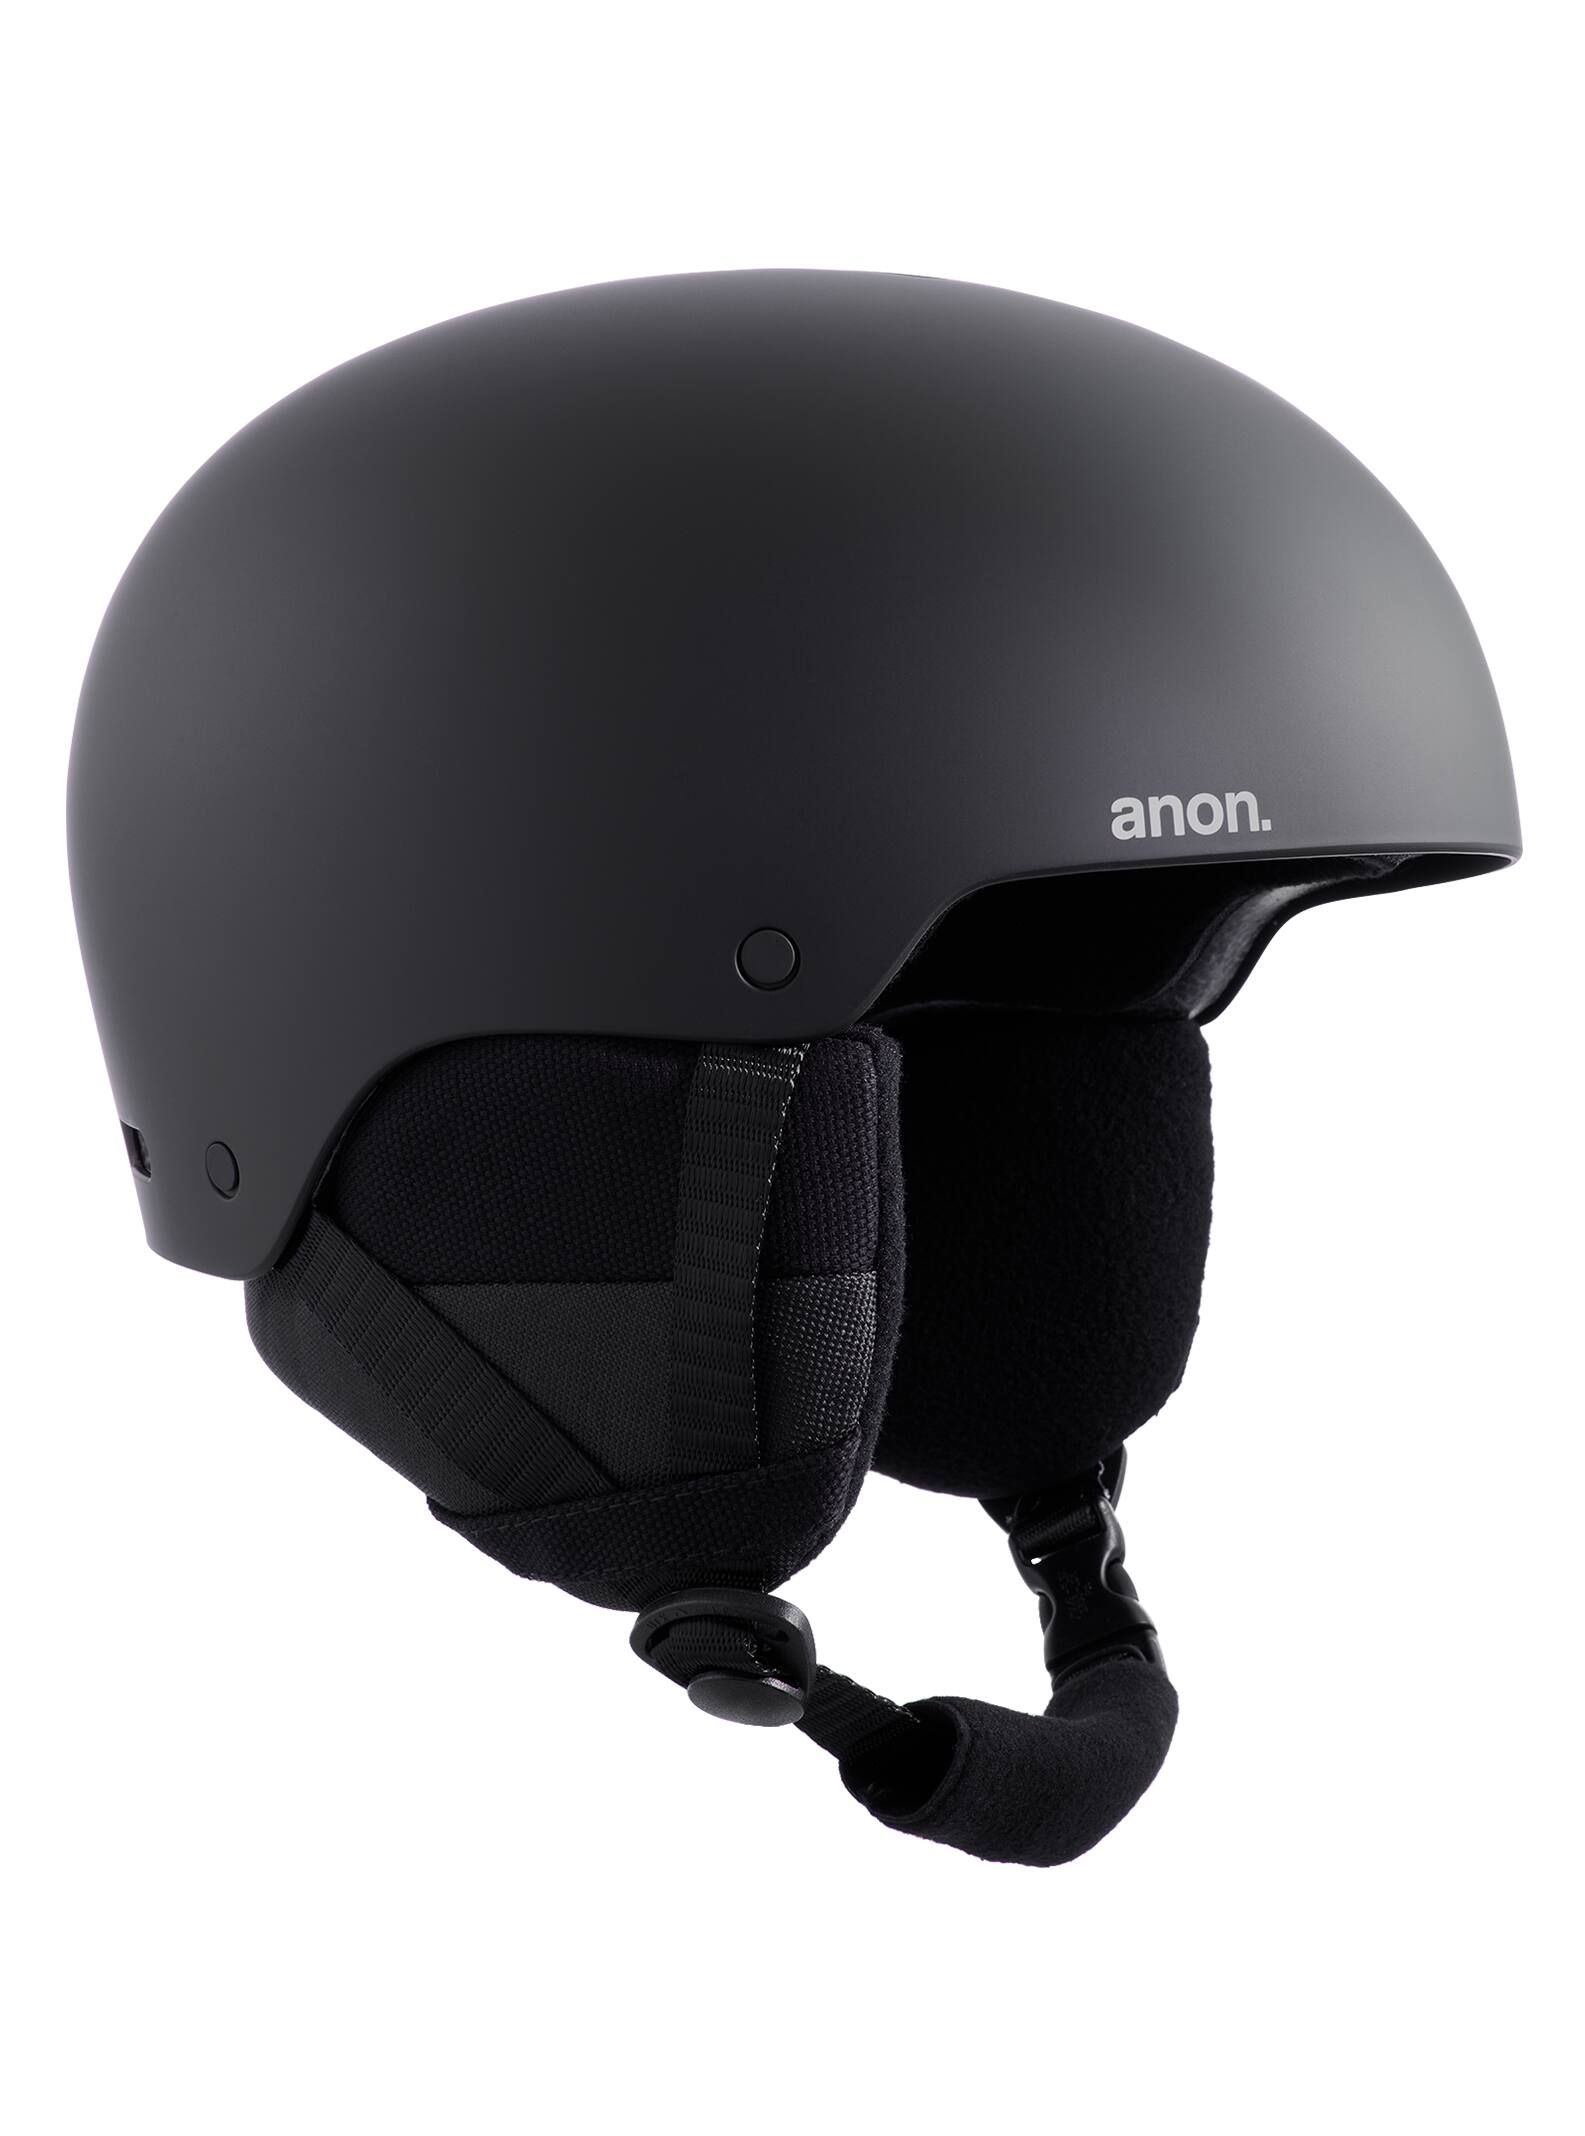 Anon Greta 3 Helmet - Round Fit | Burton.com Winter 2022 US